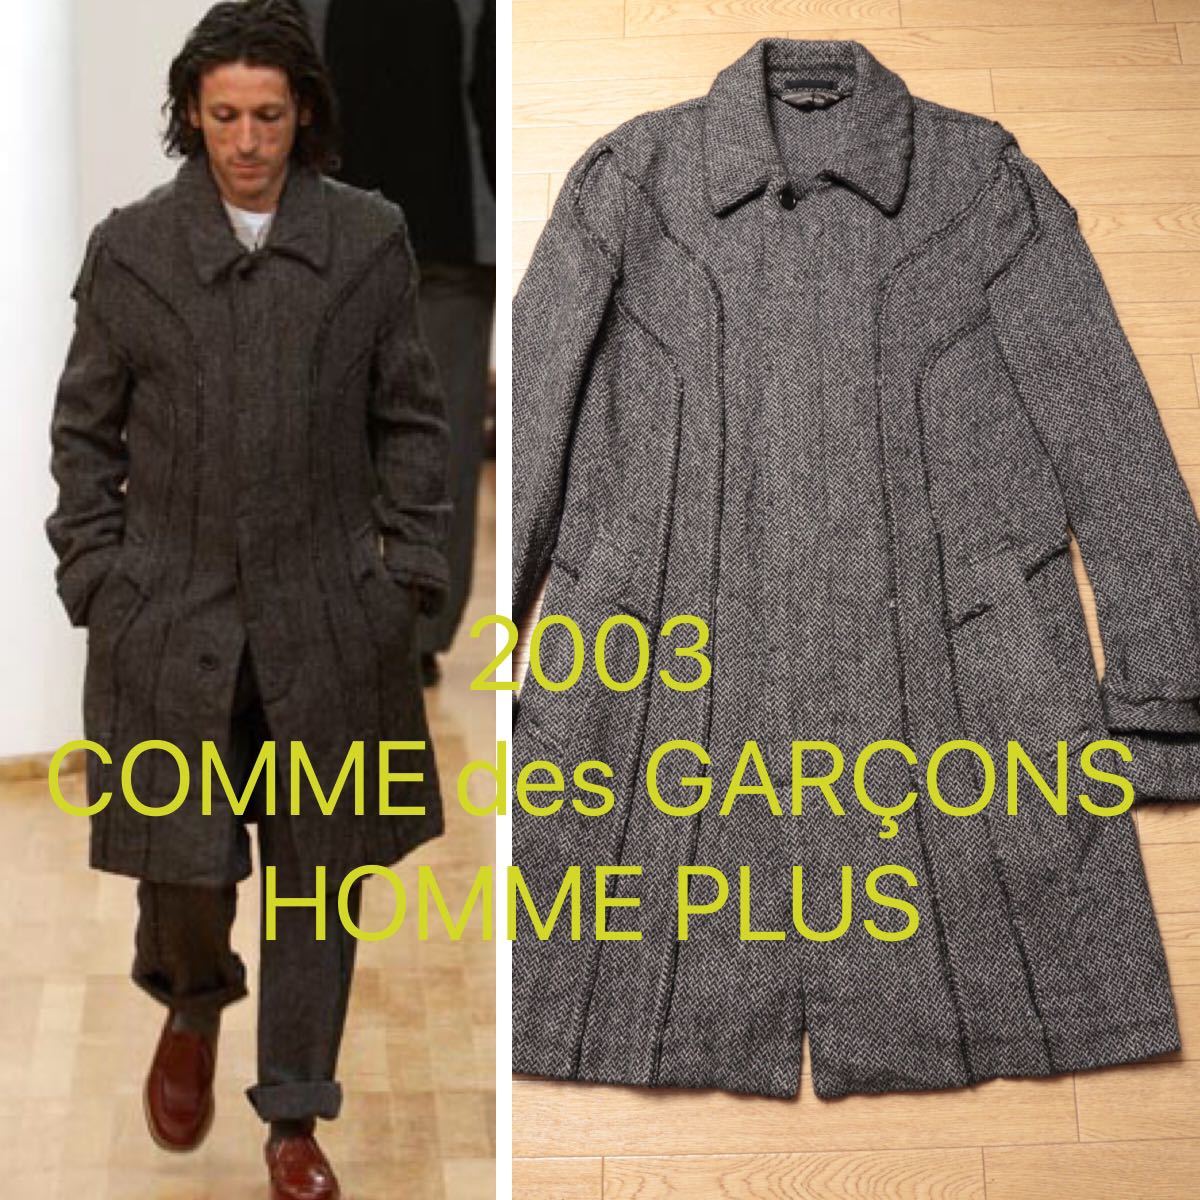 2003 Vintage カーブ期 コート コムデギャルソンオムプリュスcomme des garcons ヴィンテージ Archive アーカイブ homme plus デカオム_画像1